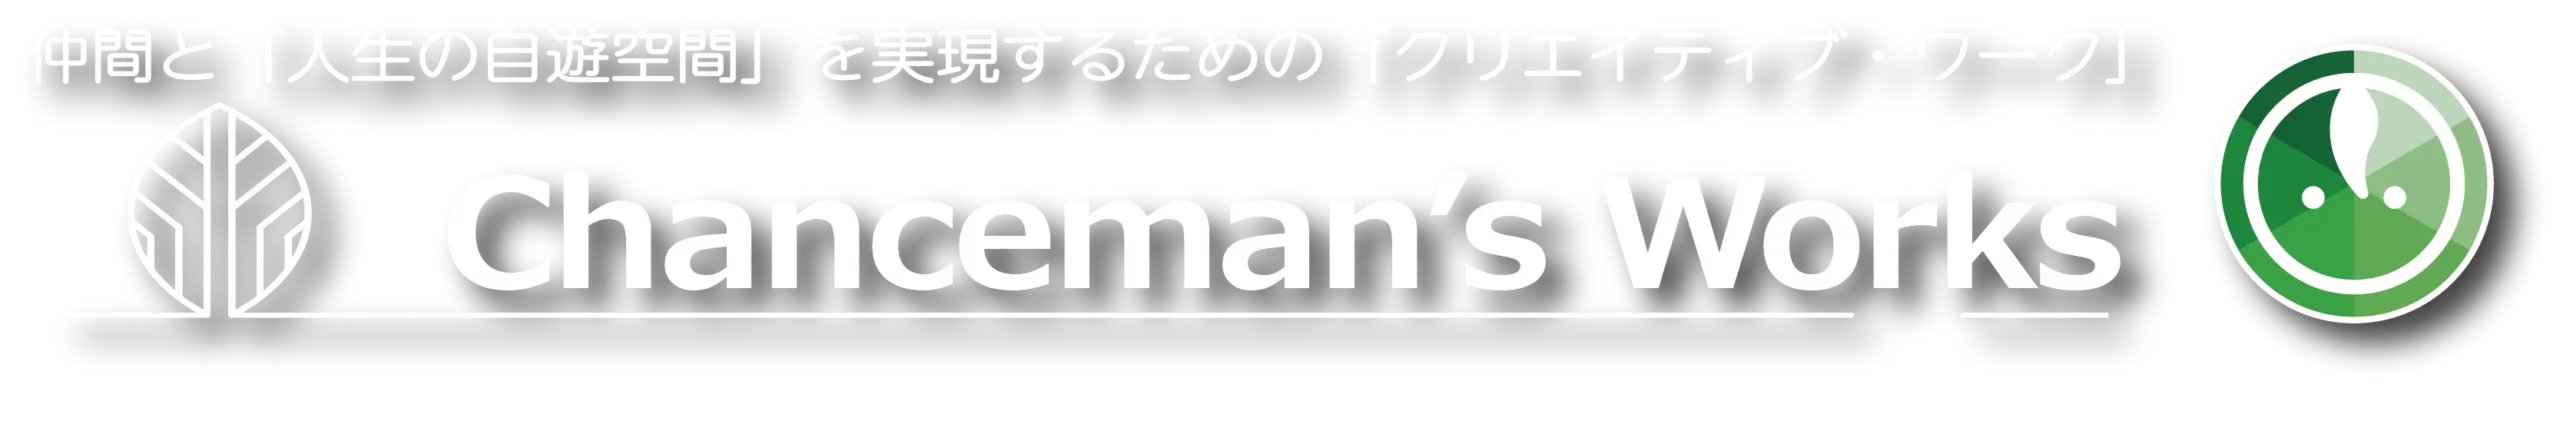 Chanceman’s Works